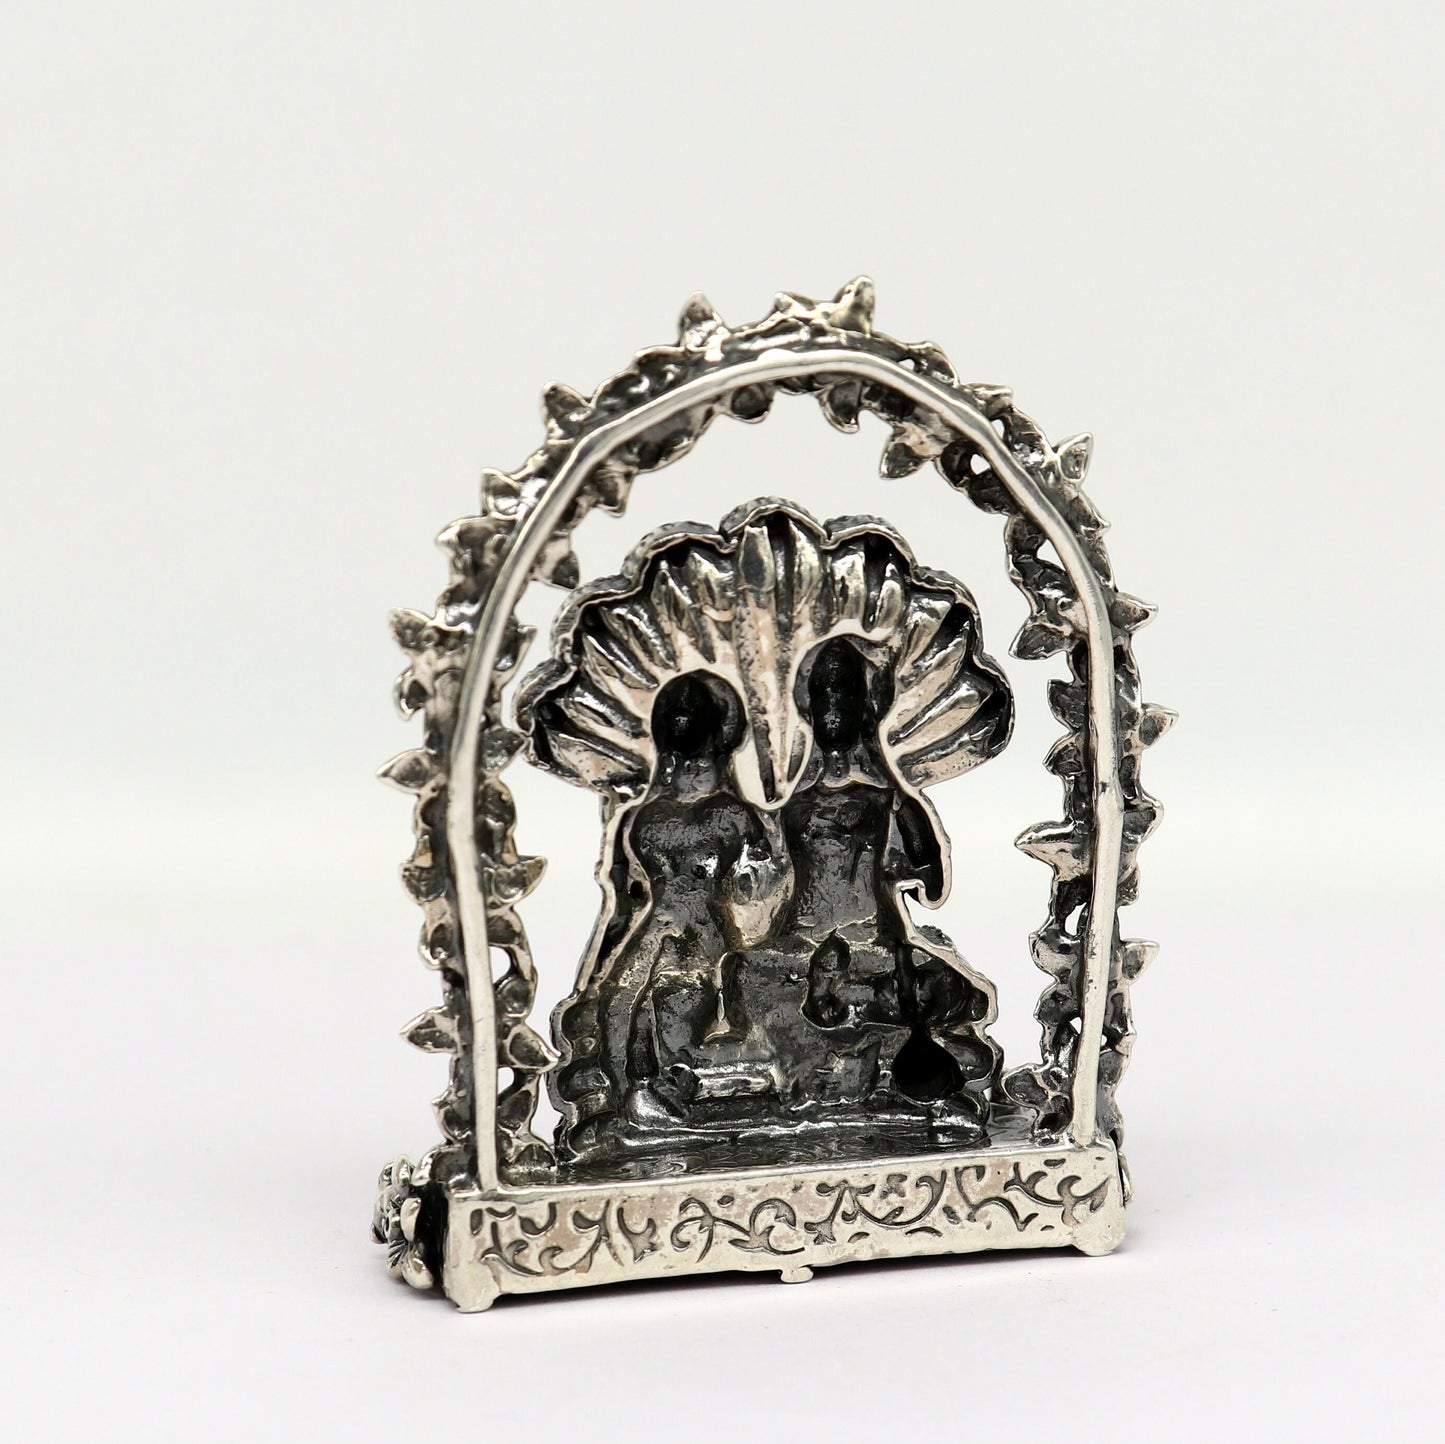 925 Sterling silver handmade Idols Laxmi & Lord Vishnu Statue figurine, Lakshmi Narayan with Sheshnag, laxmi narayanan satue sculpture art14 - TRIBAL ORNAMENTS